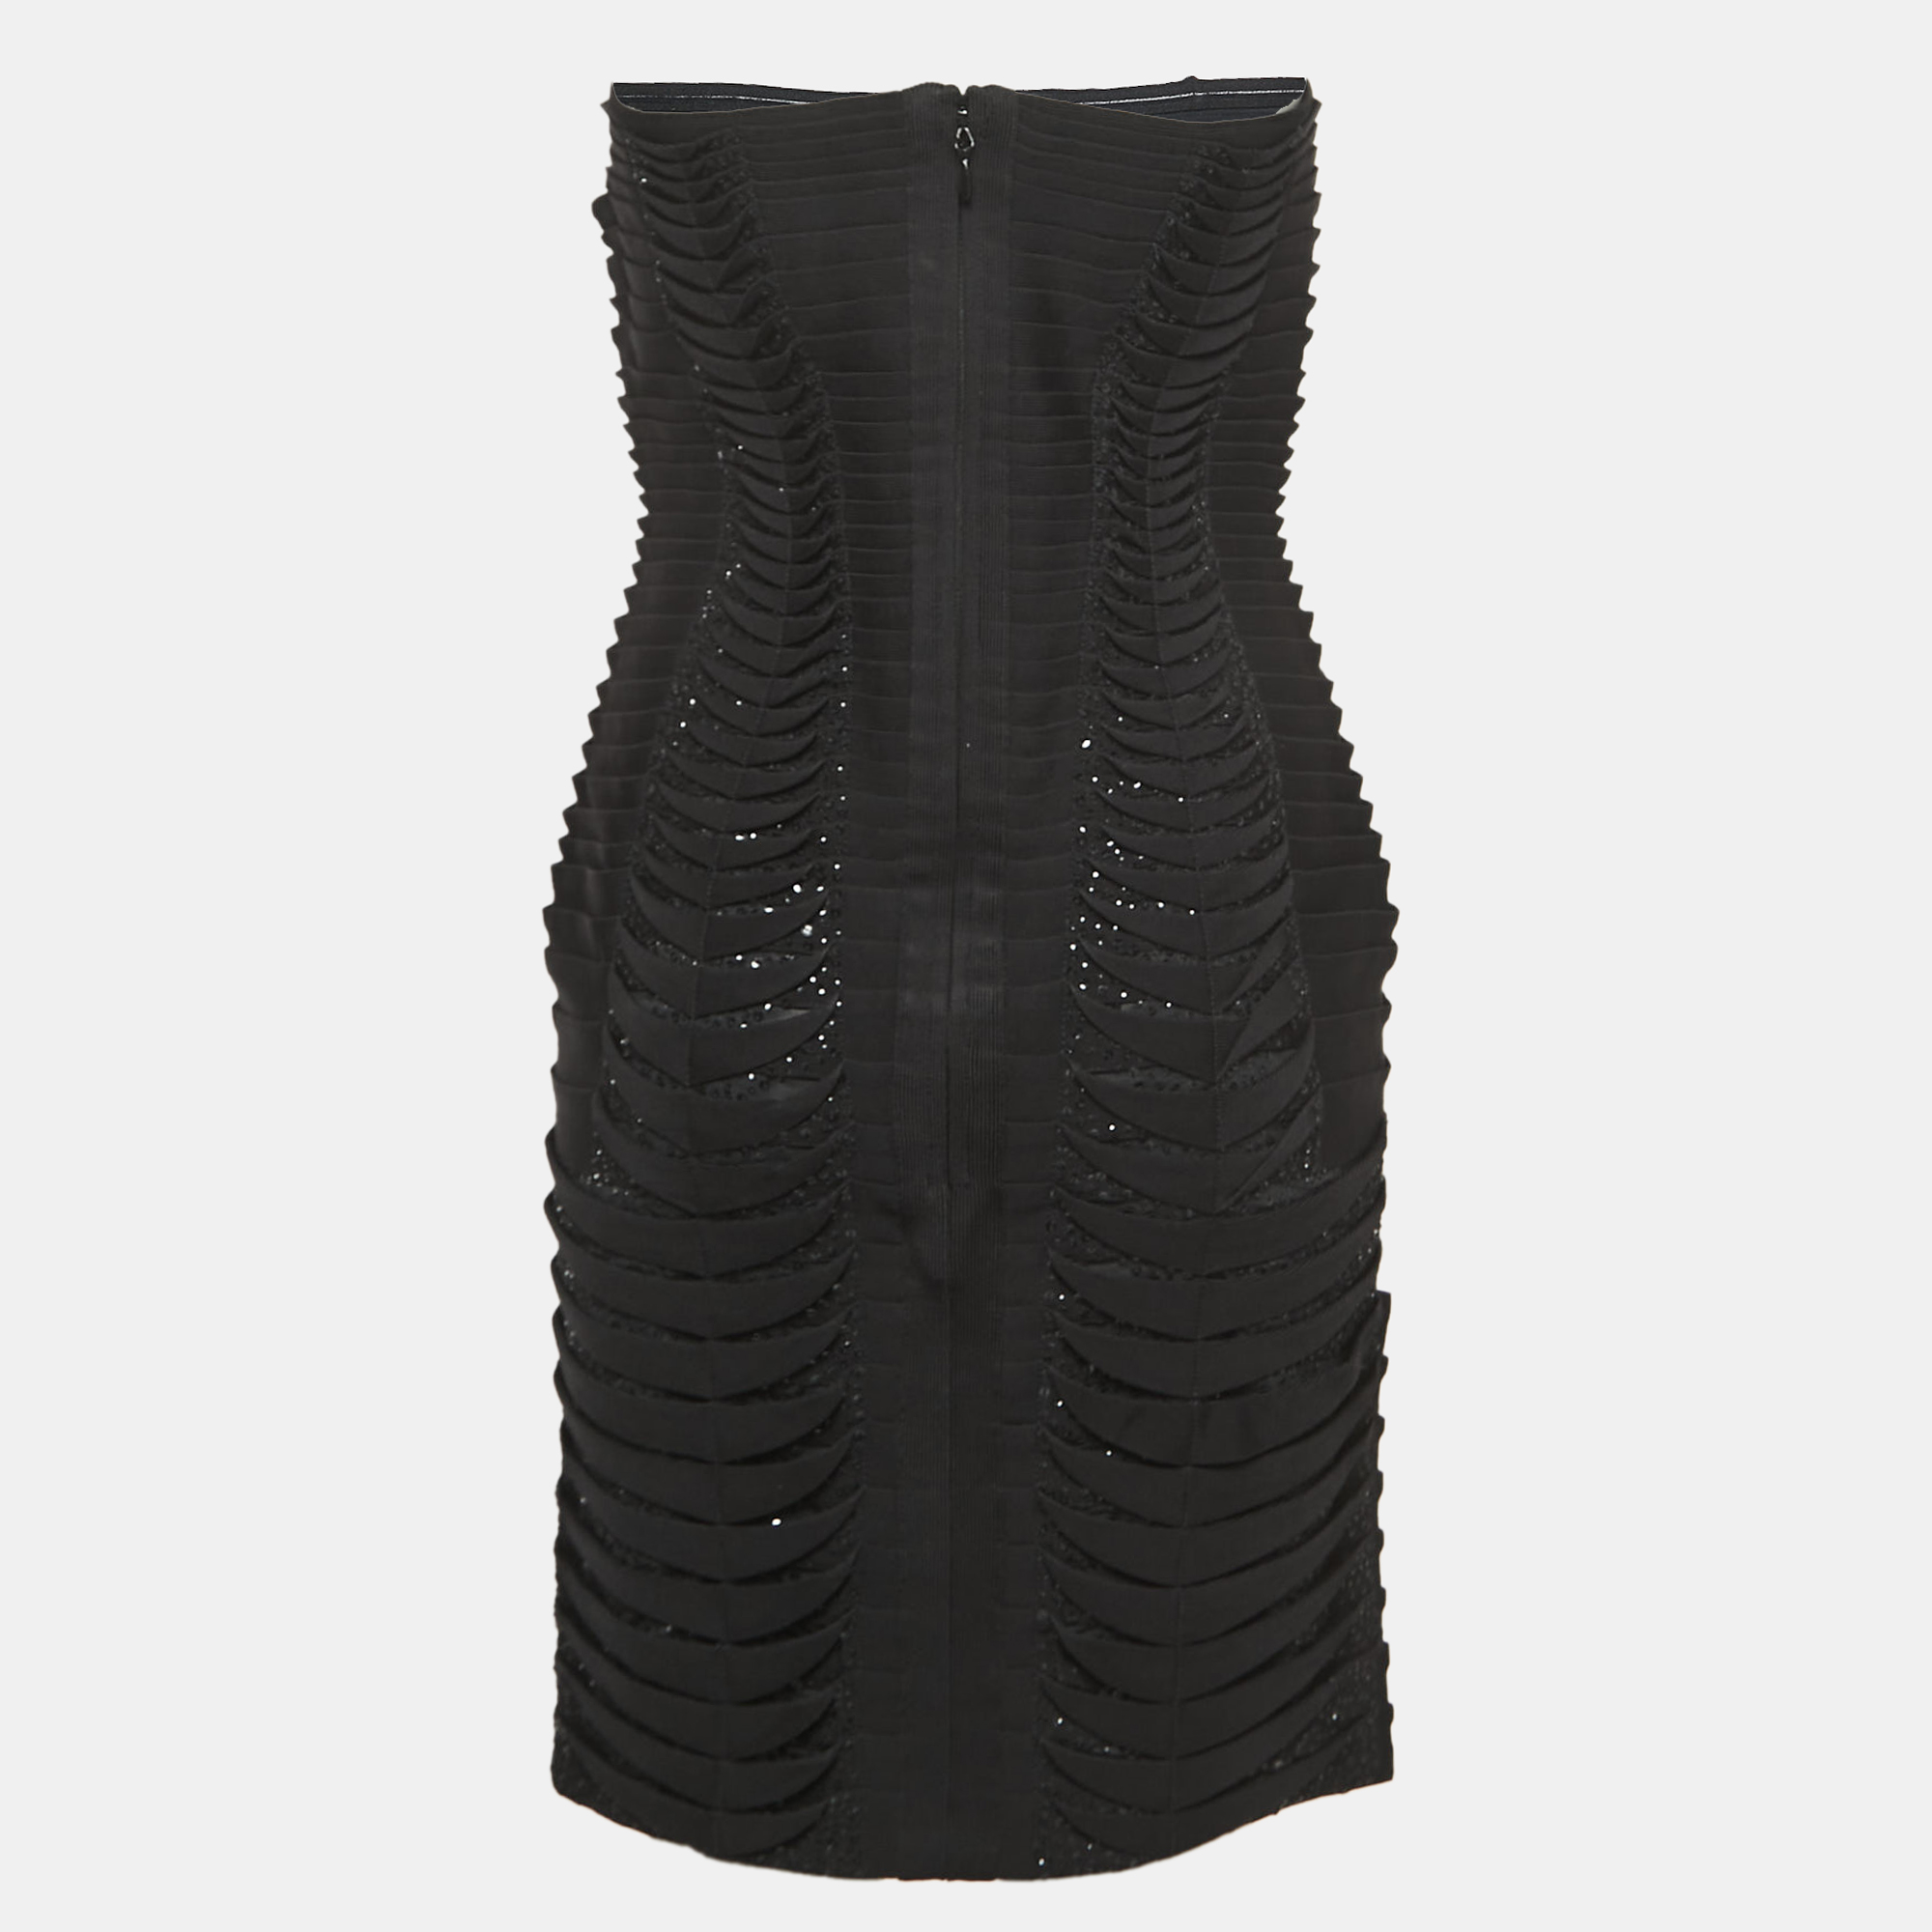 

Herve Leger Black Sequined Knit Strapless Mini Dress